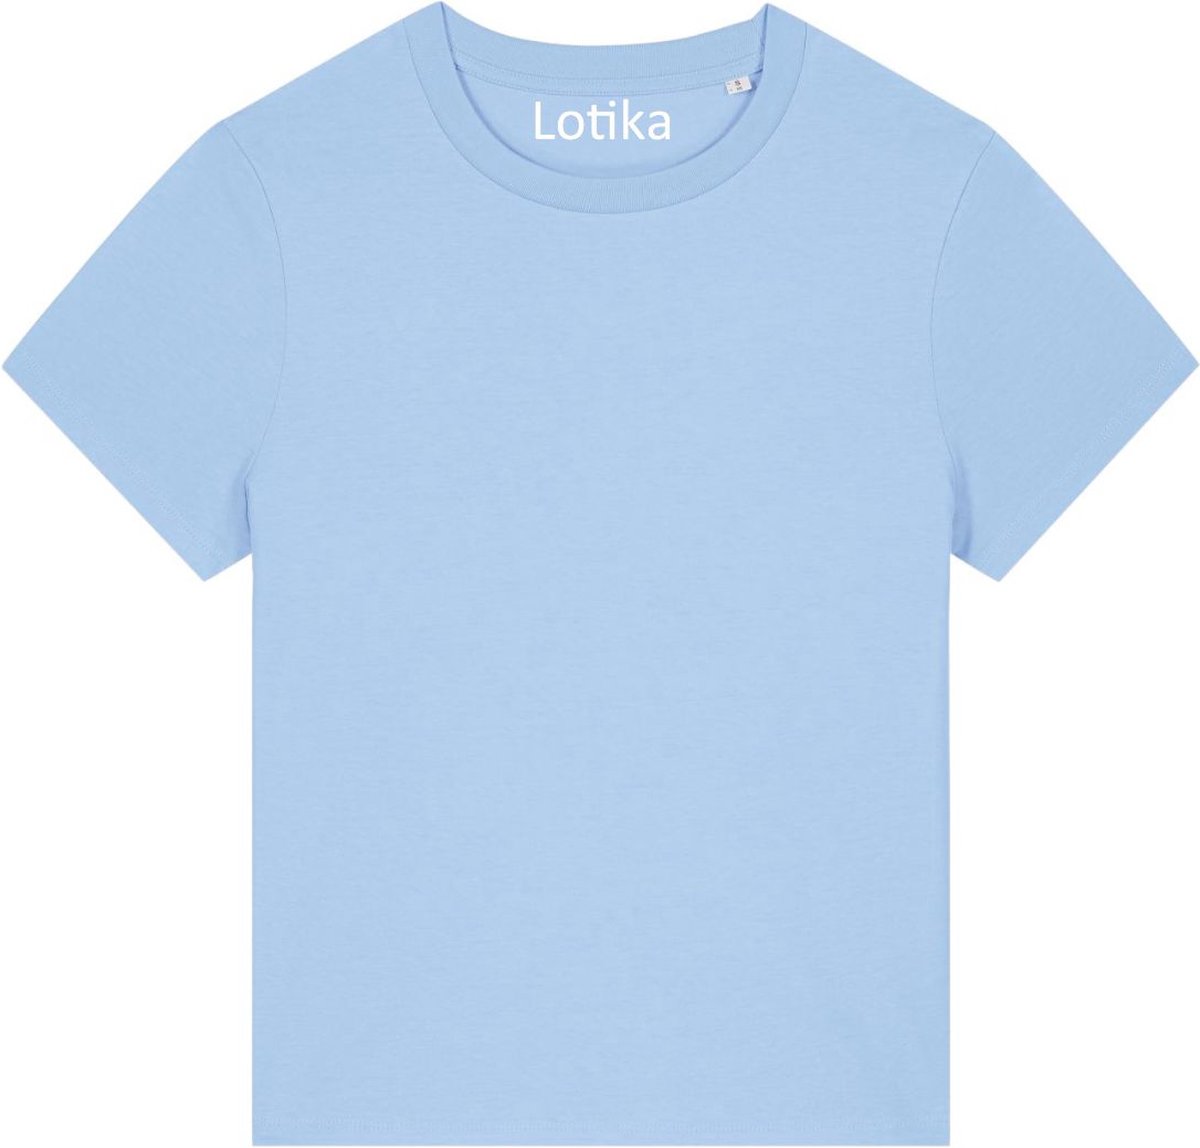 Lotika - Saar T-shirt dames biologisch katoen - blue soul